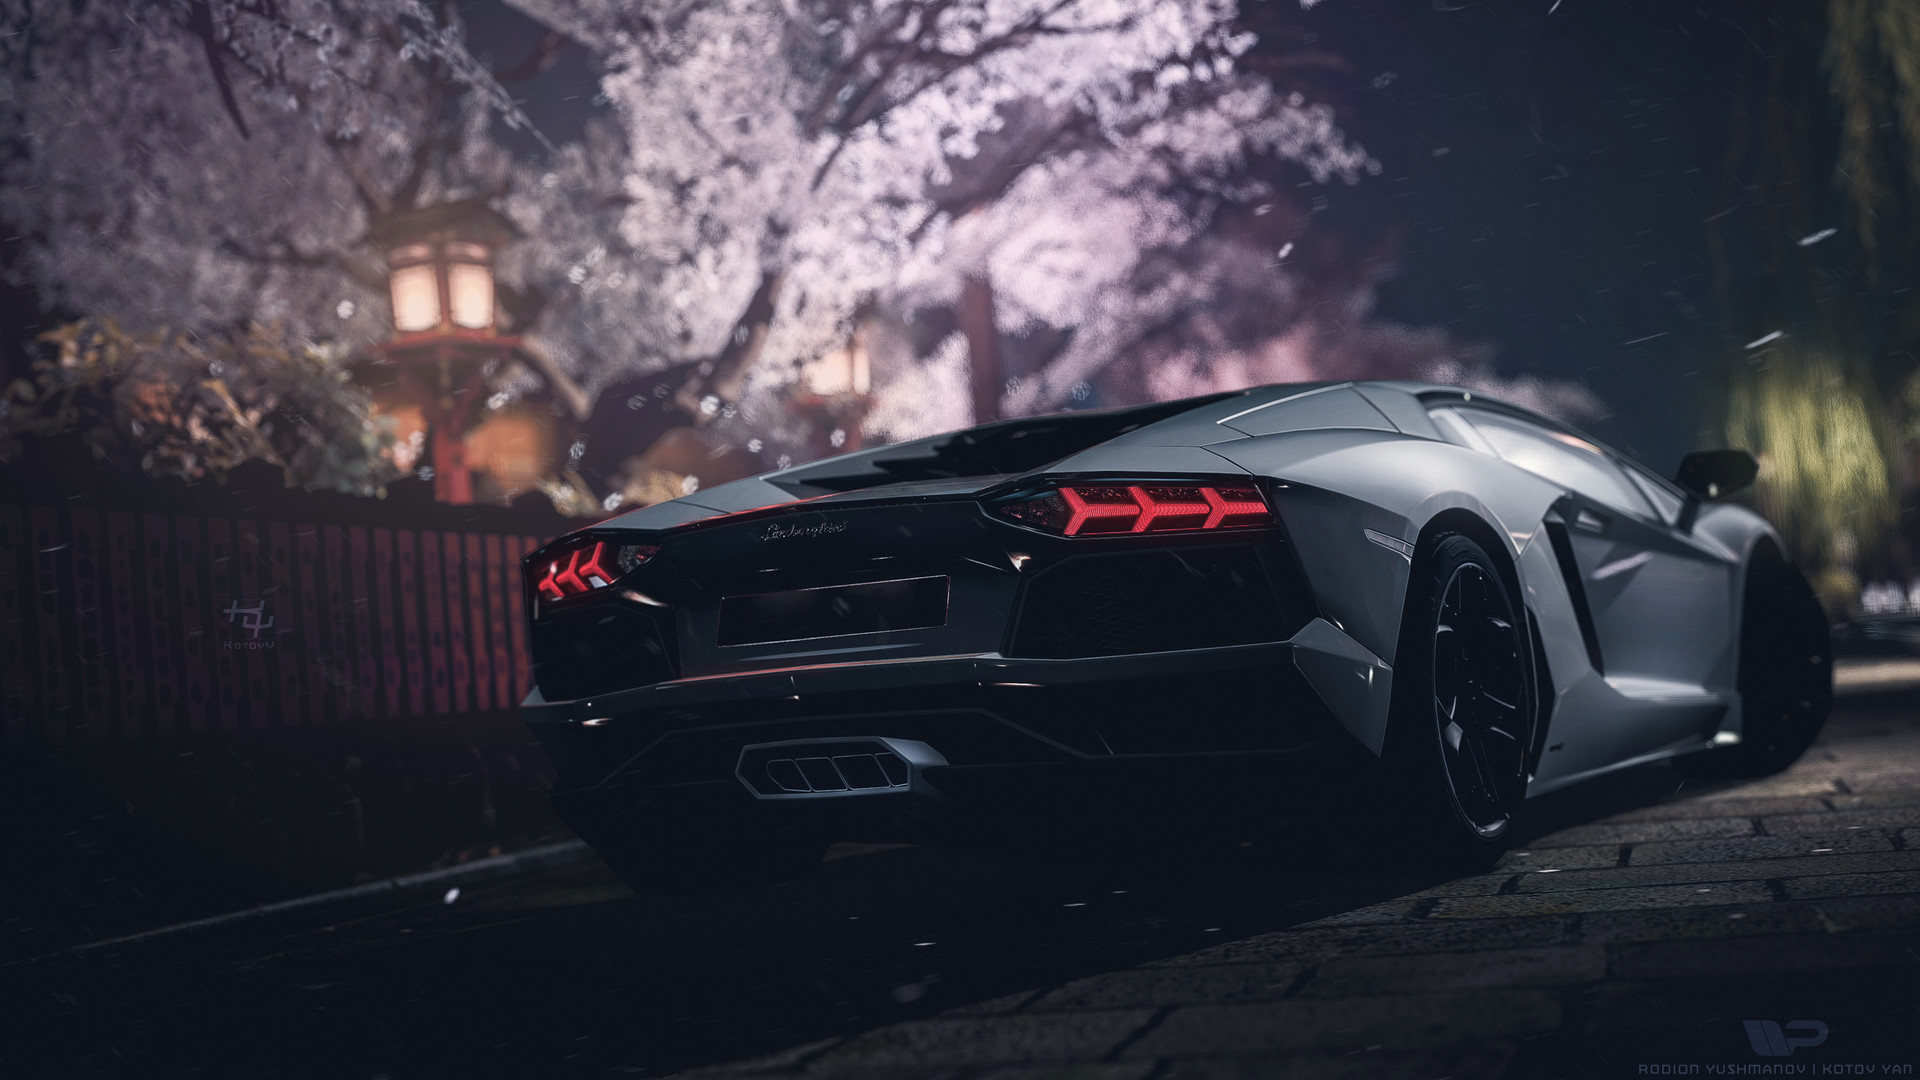 Grey Lamborghini Aventador Hd Cars 4k Wallpapers Images Backgrounds